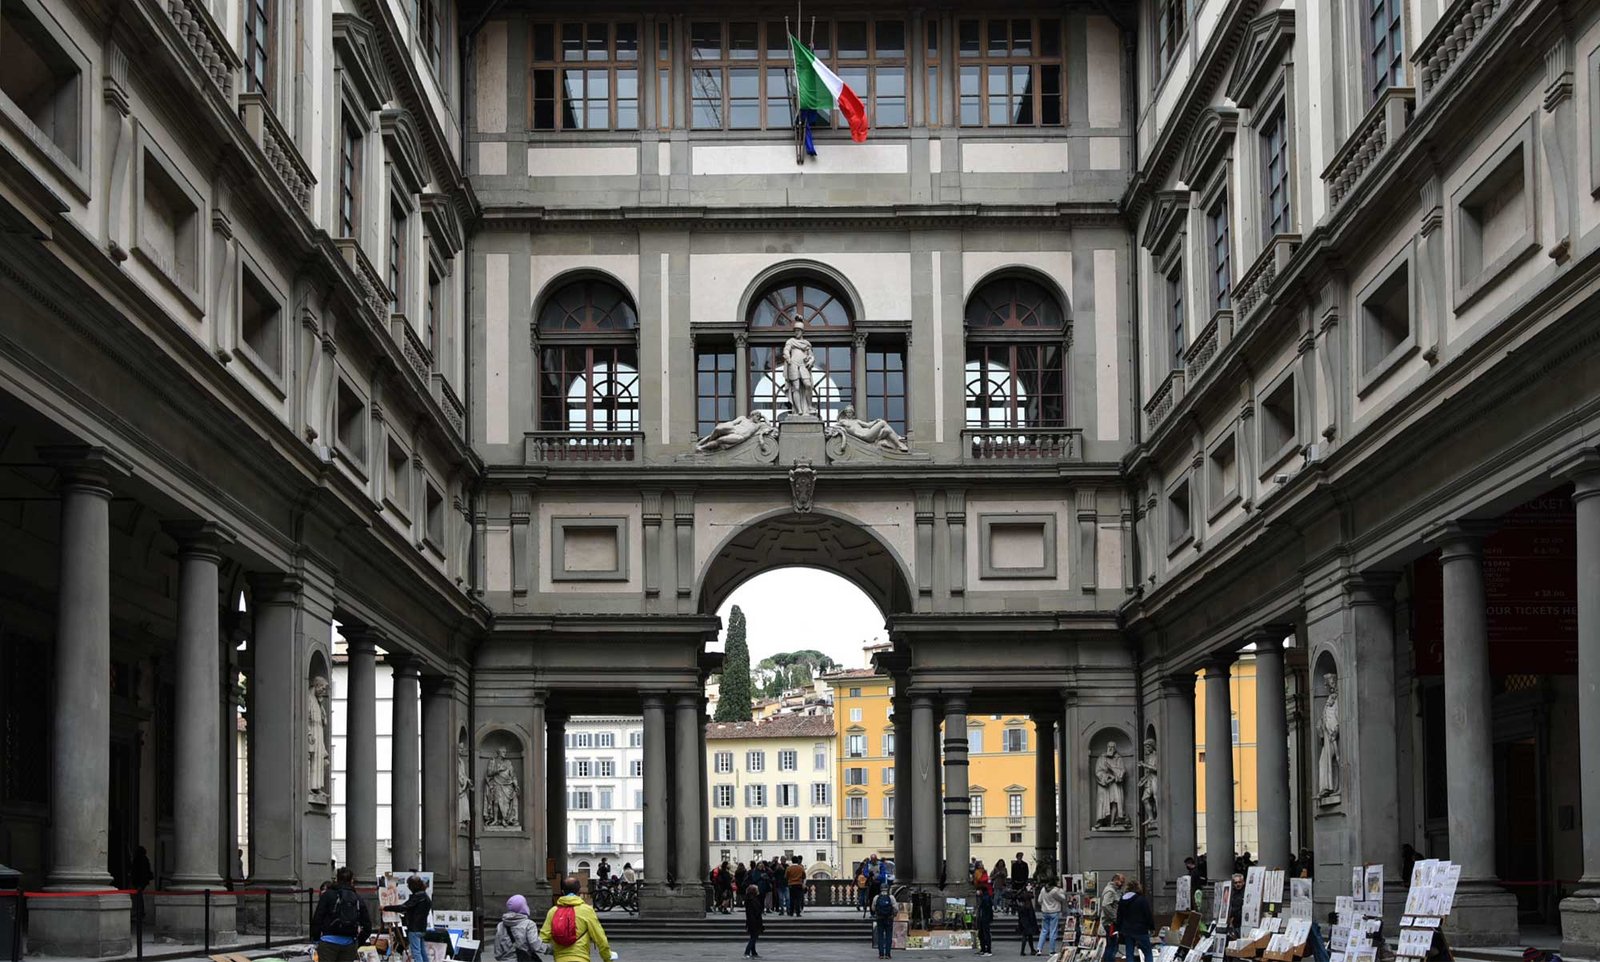 a picture of Uffizi gallery